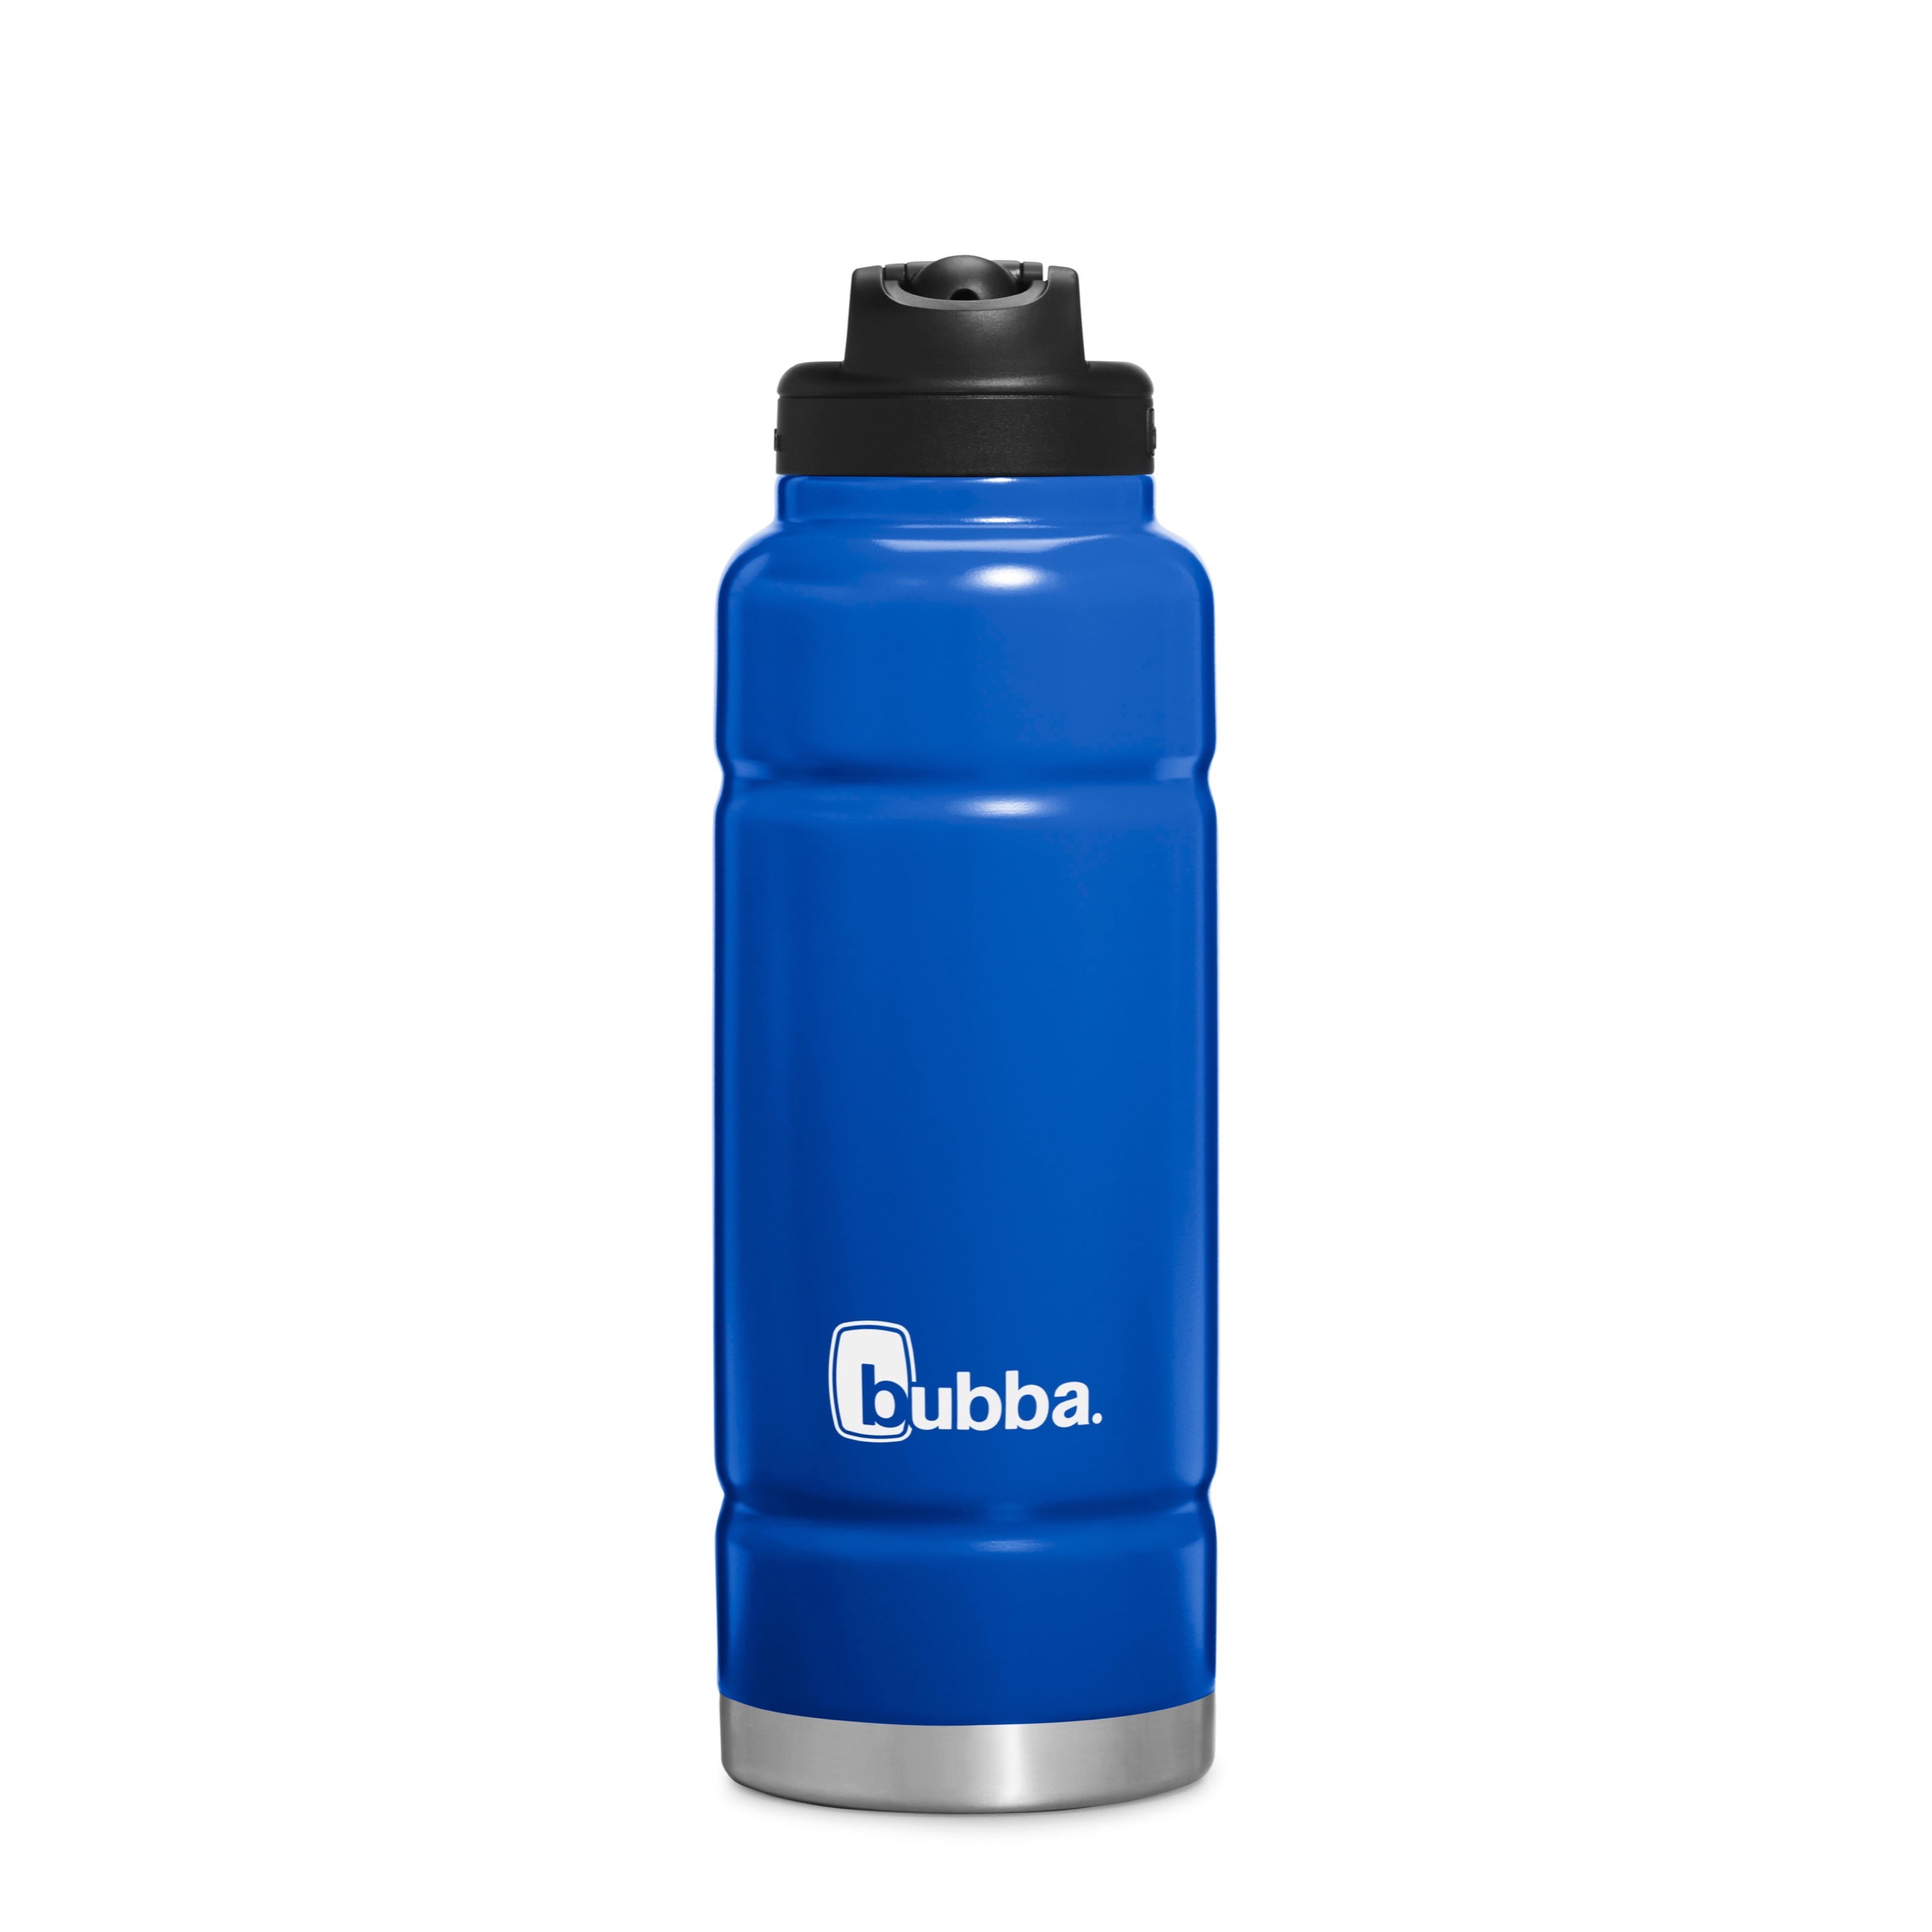 Bubba Trailblazer Stainless Steel Water Bottle Straw Lid Rubberized Black Licorice, 40 fl oz.